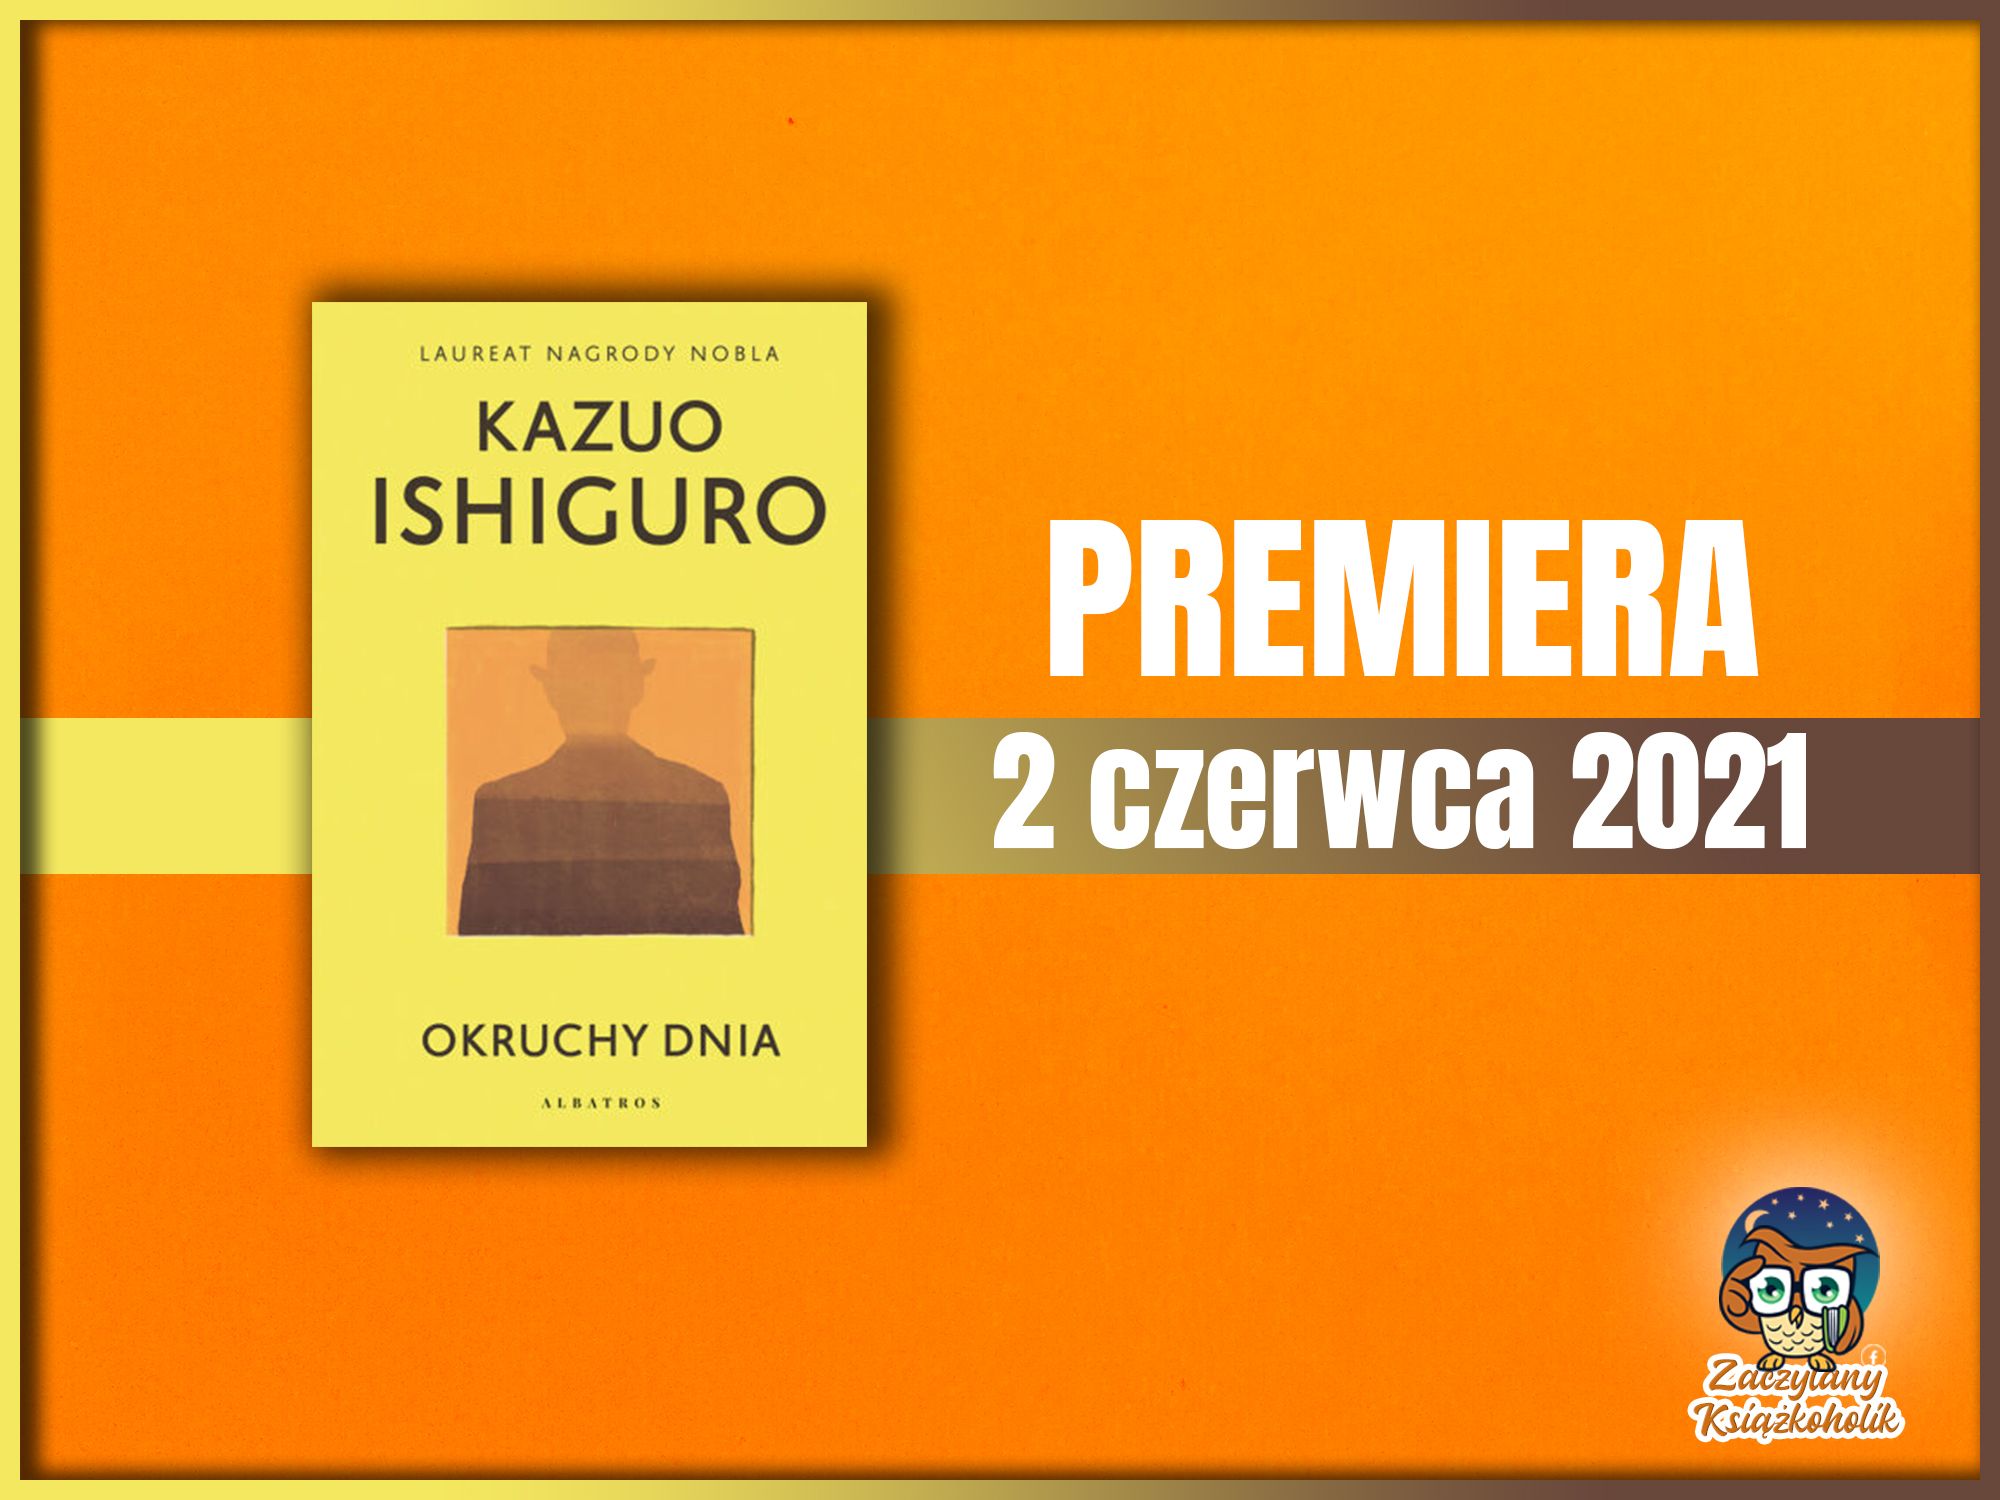 Okruchy dnia, Kazuo Ishiguro, zaczytanyksiazkoholik.pl